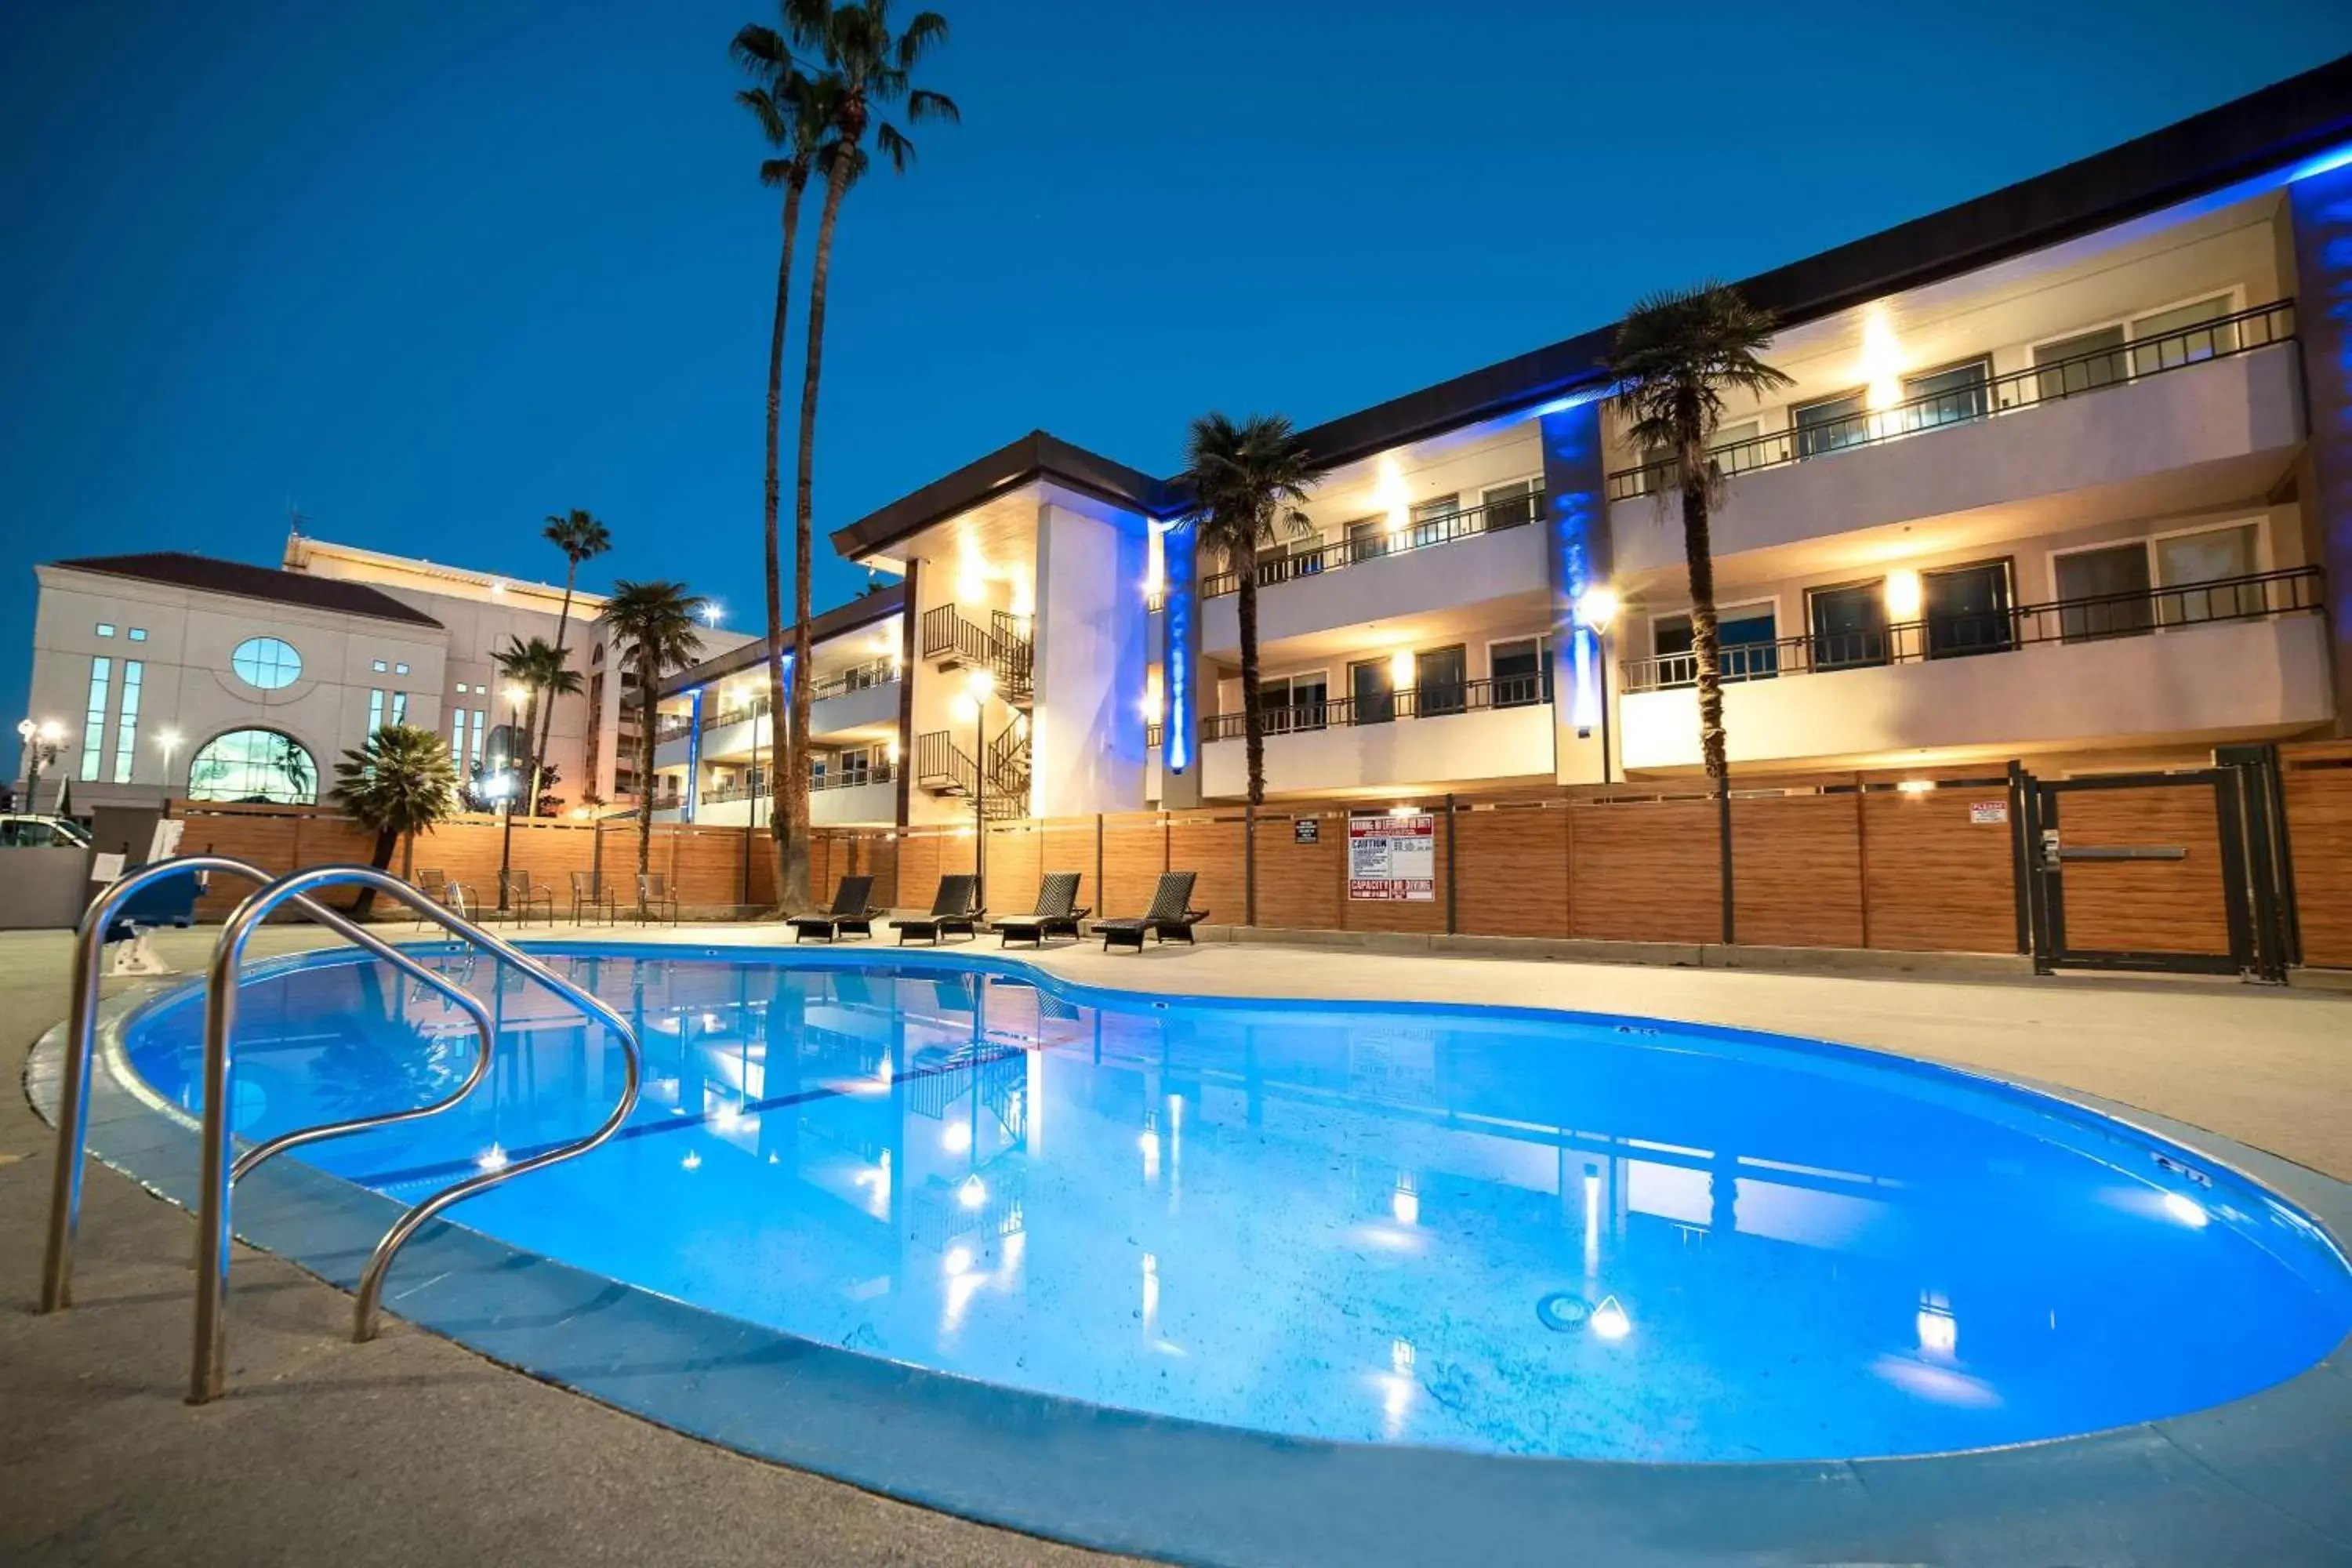 Swimming Pool in Studio 6 Suites Stockton, CA Waterfront